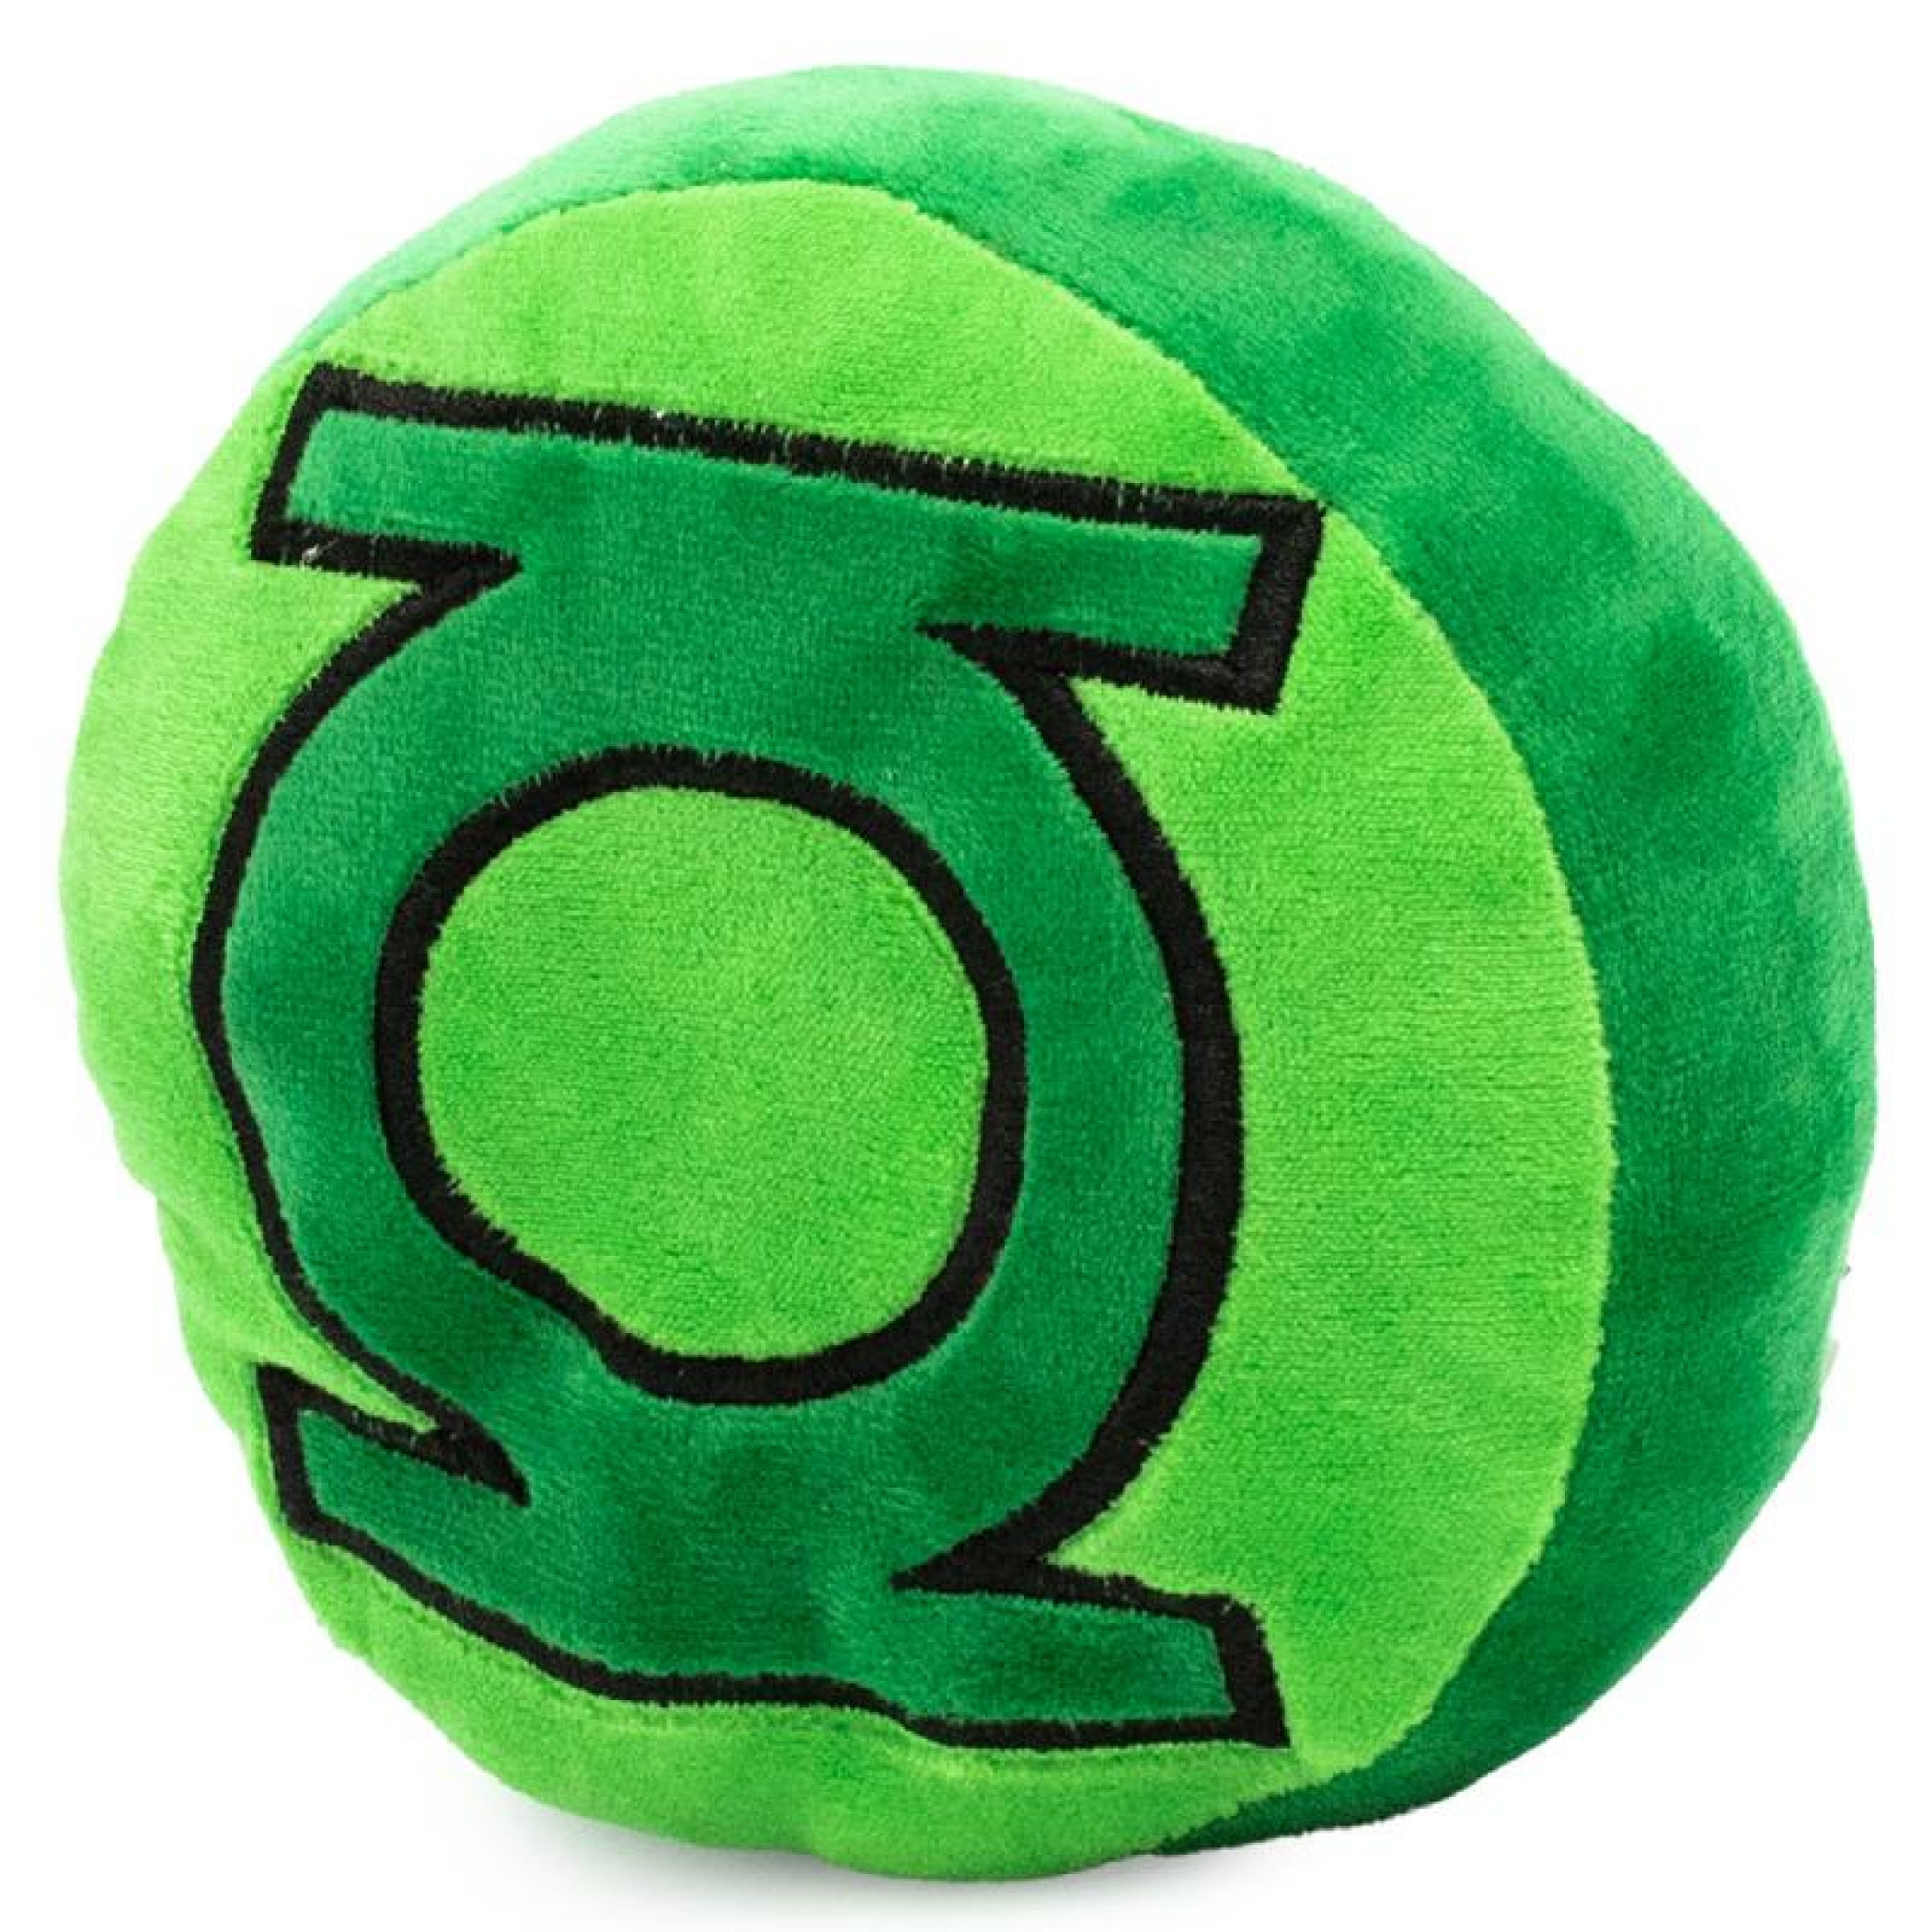 DC Comics Green Lantern Shaped Plush Squeaky Dog Toy